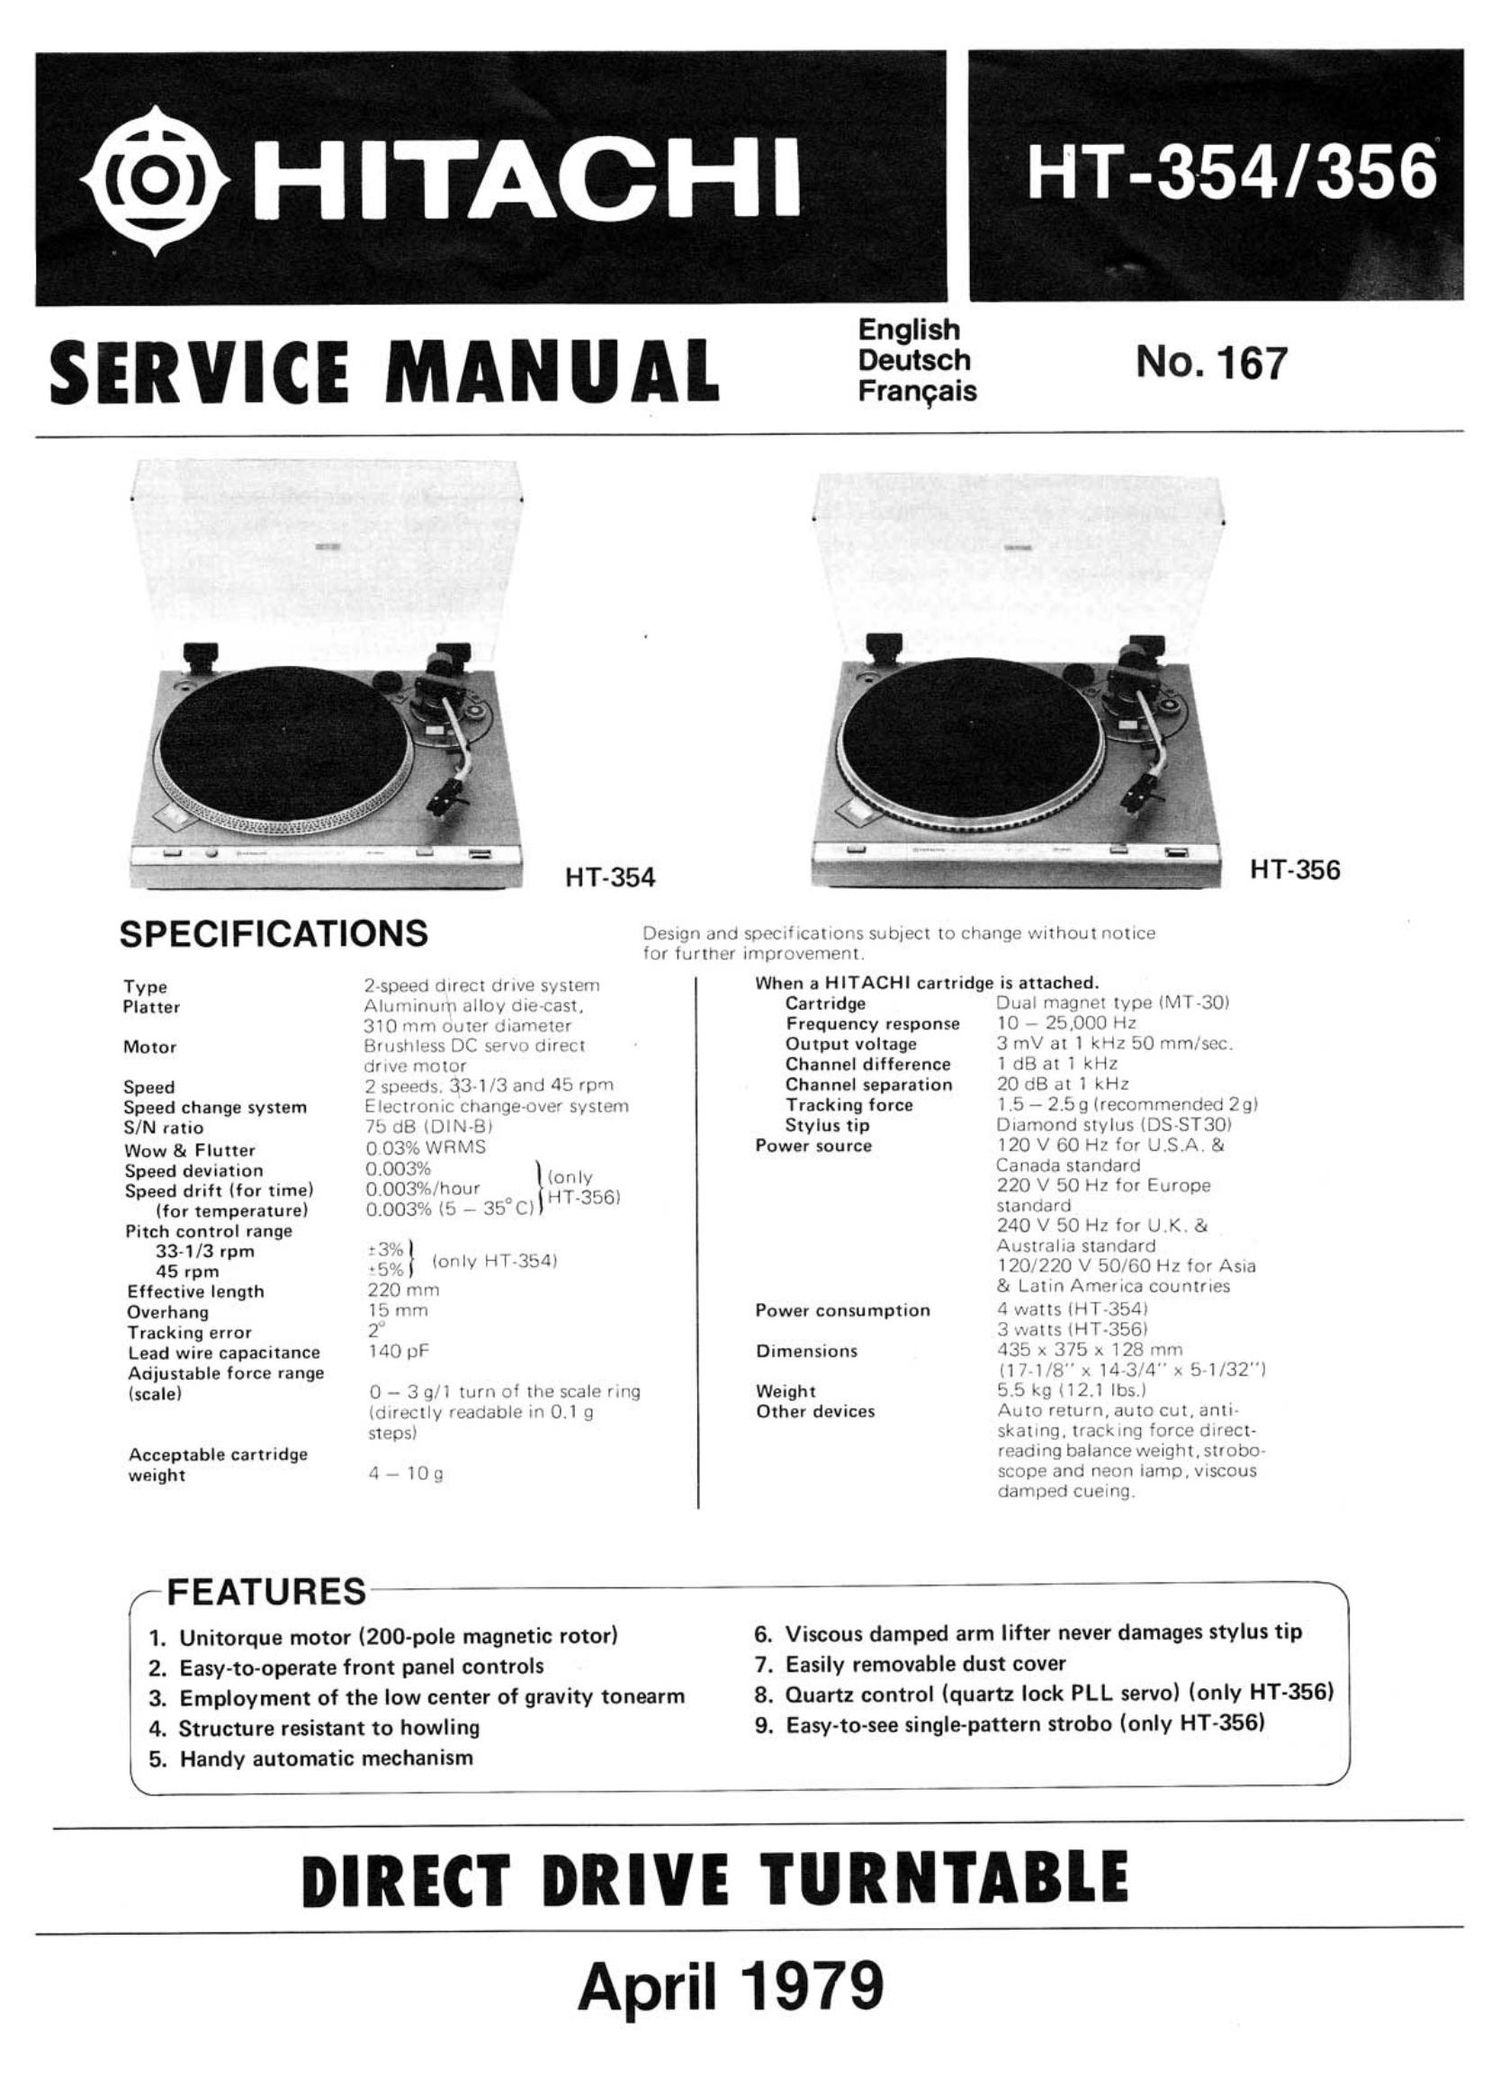 Hitachi HT 356 Service Manual